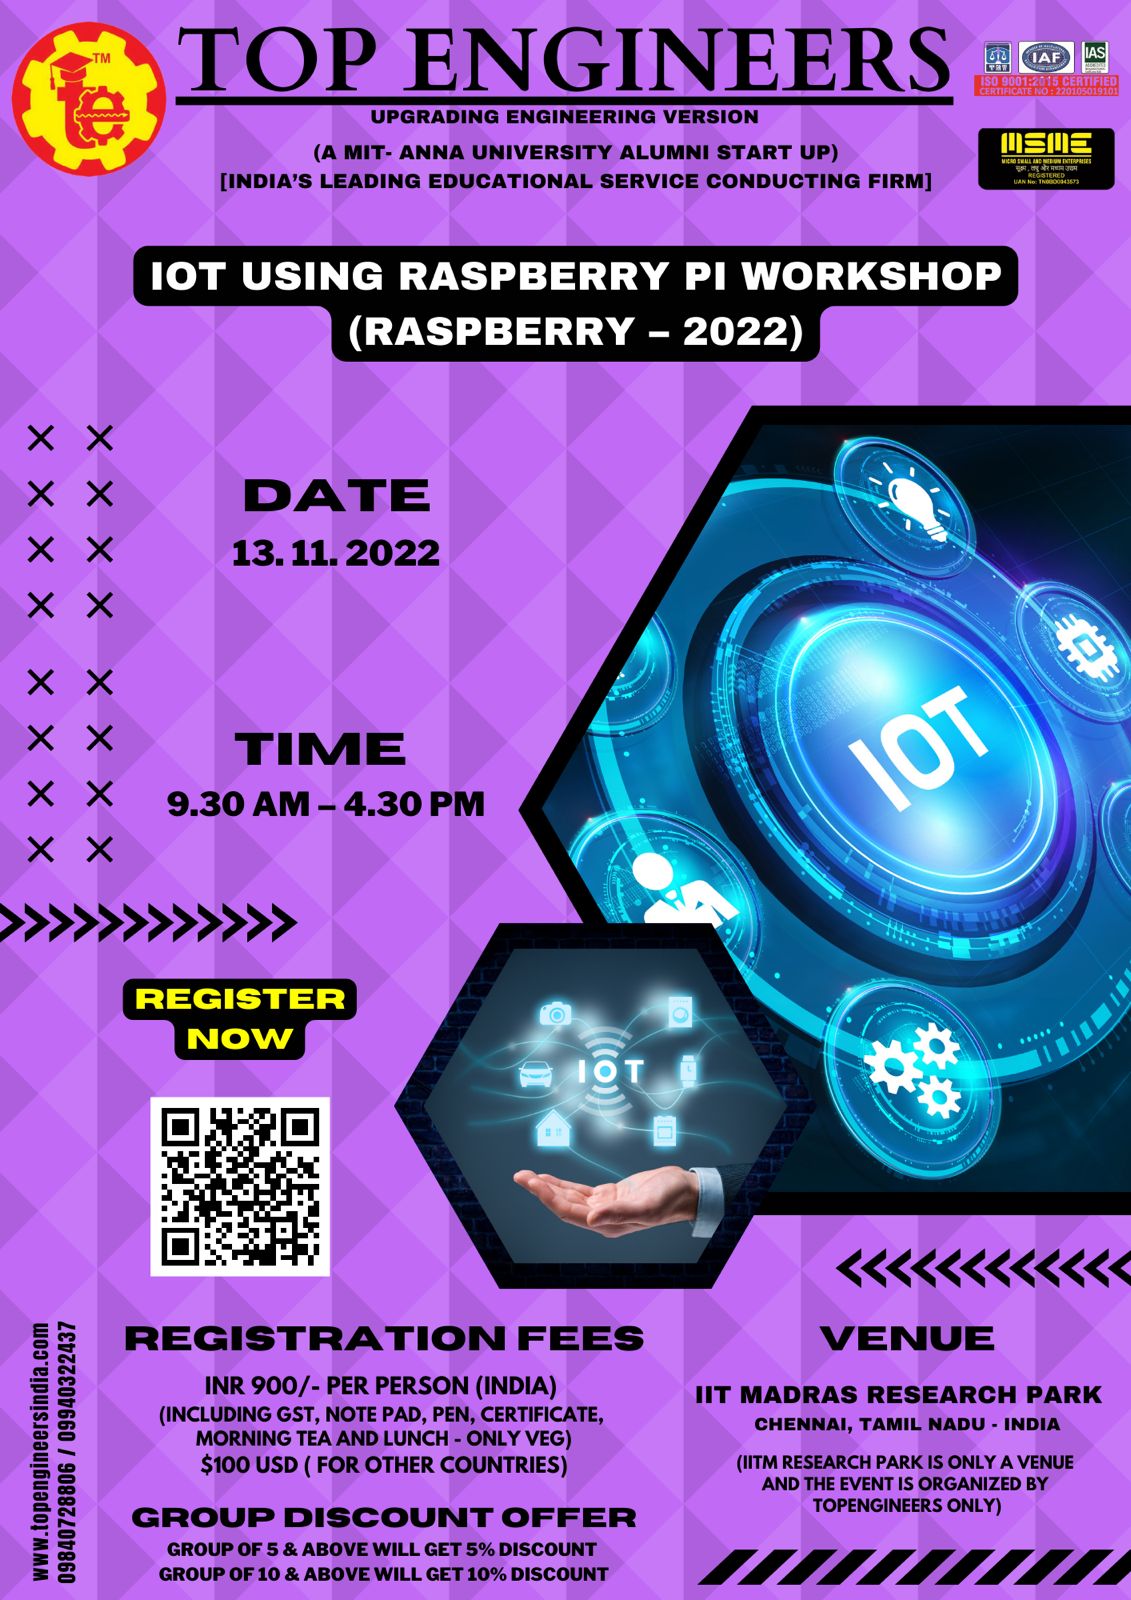 IoT using Raspberry Pi Workshop (Raspberry - 2022)